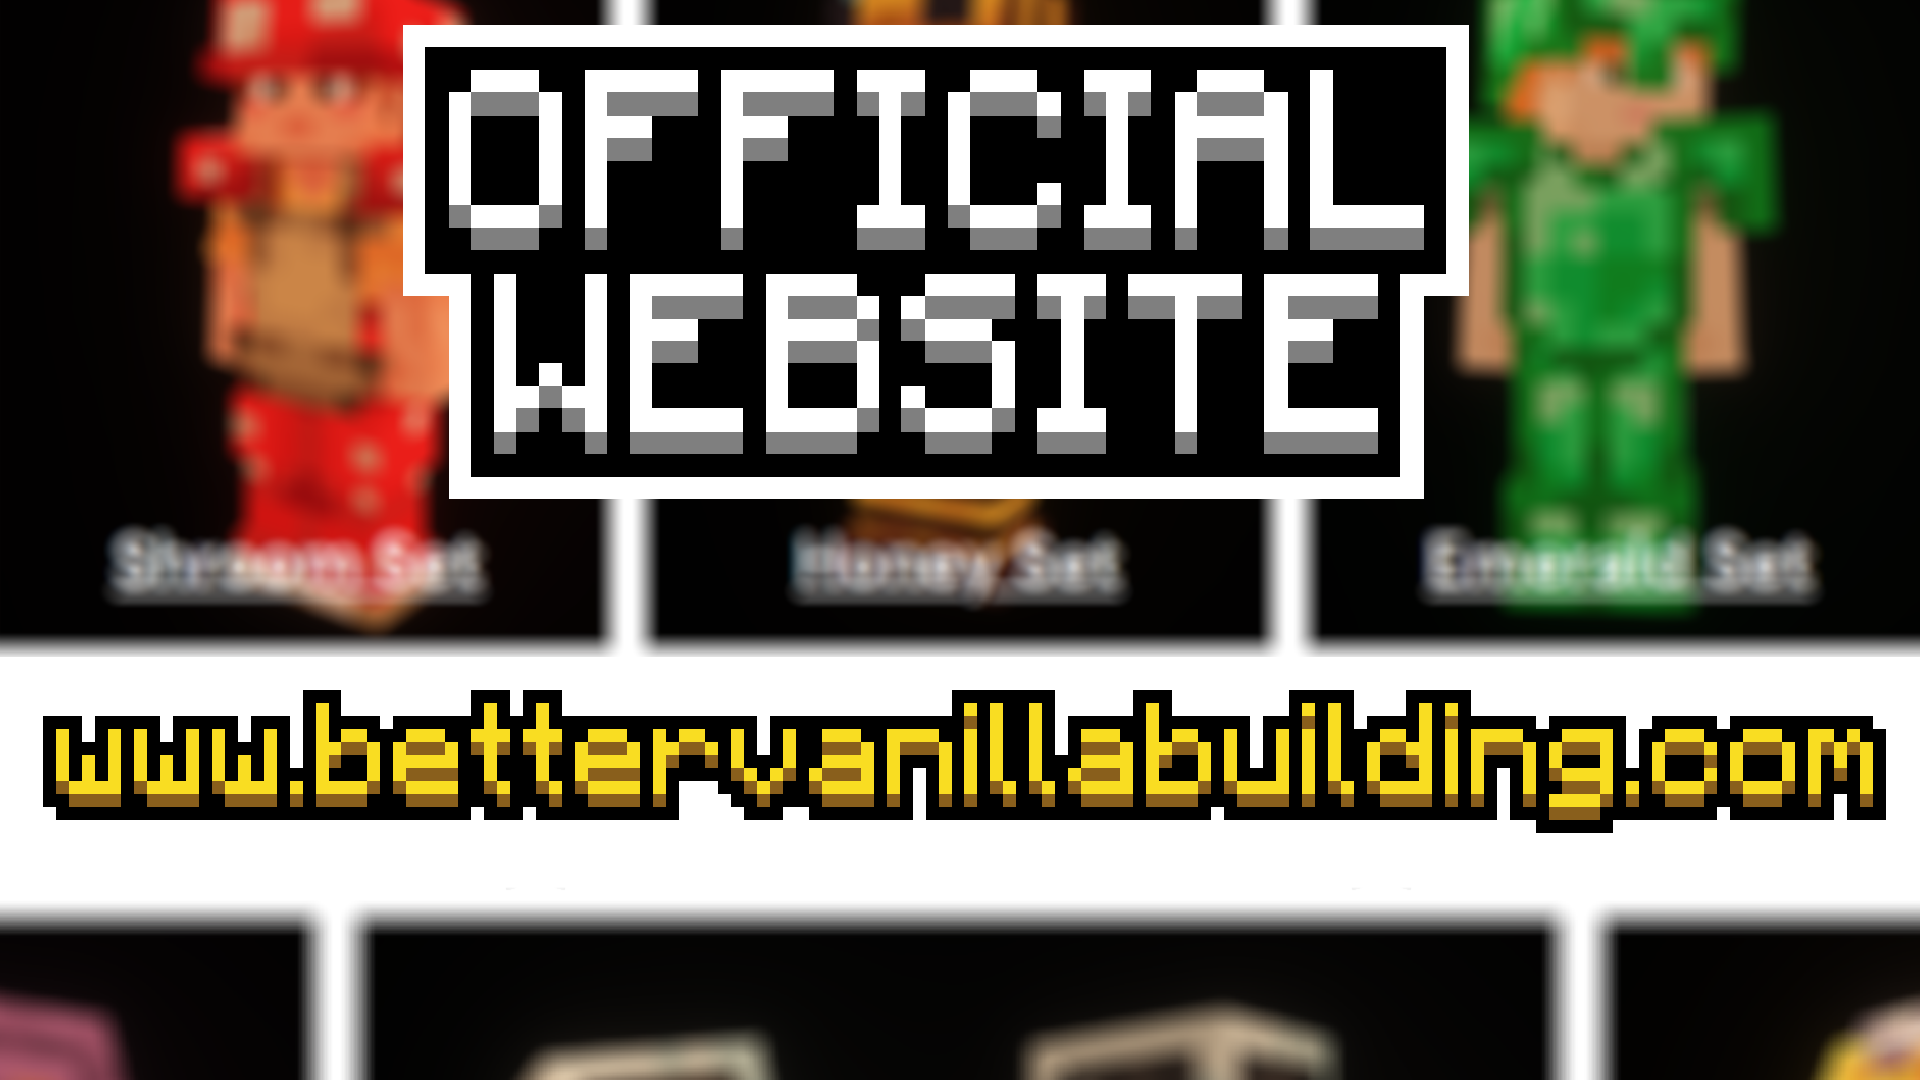 BetterVanillaBuilding website